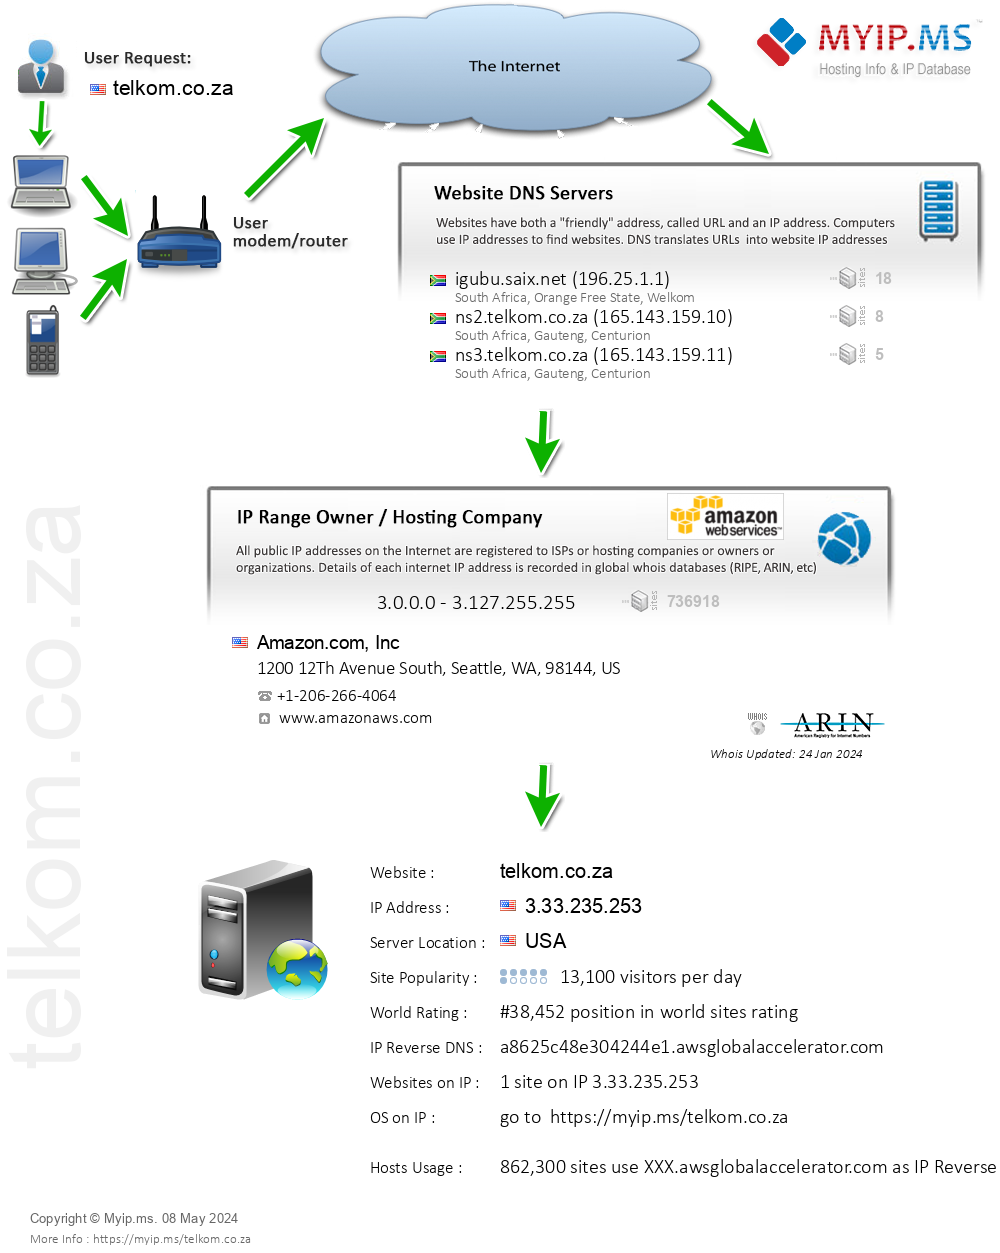 Telkom.co.za - Website Hosting Visual IP Diagram